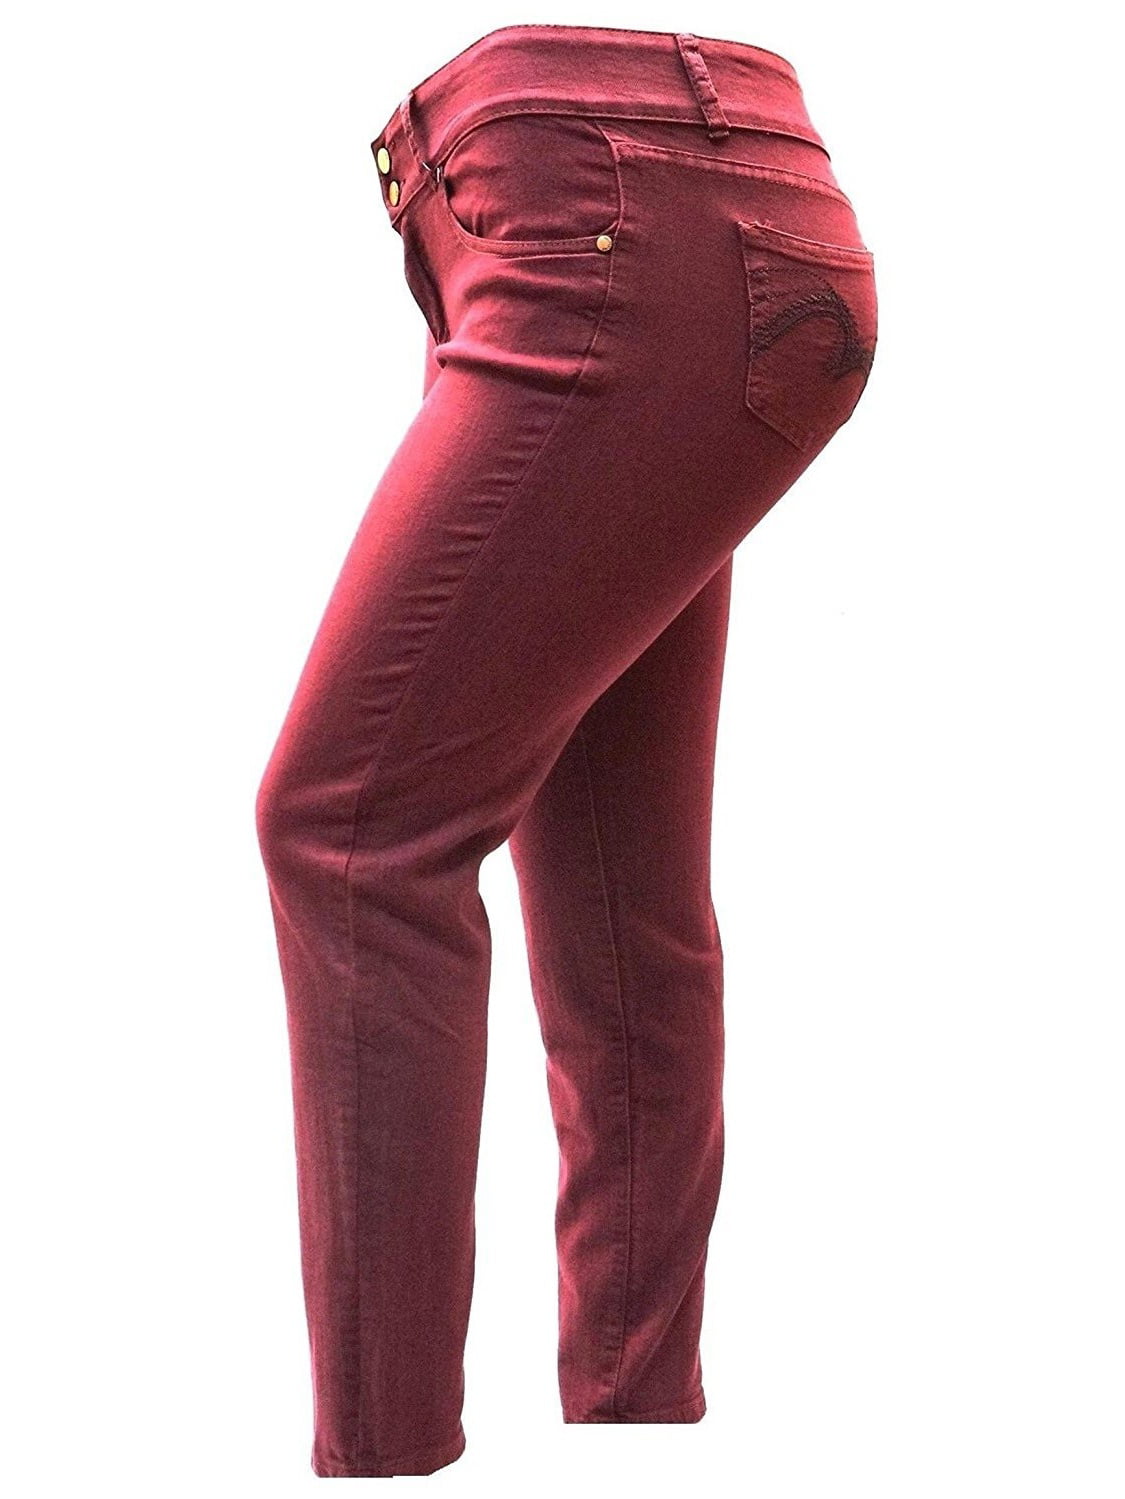 burgundy jeans womens